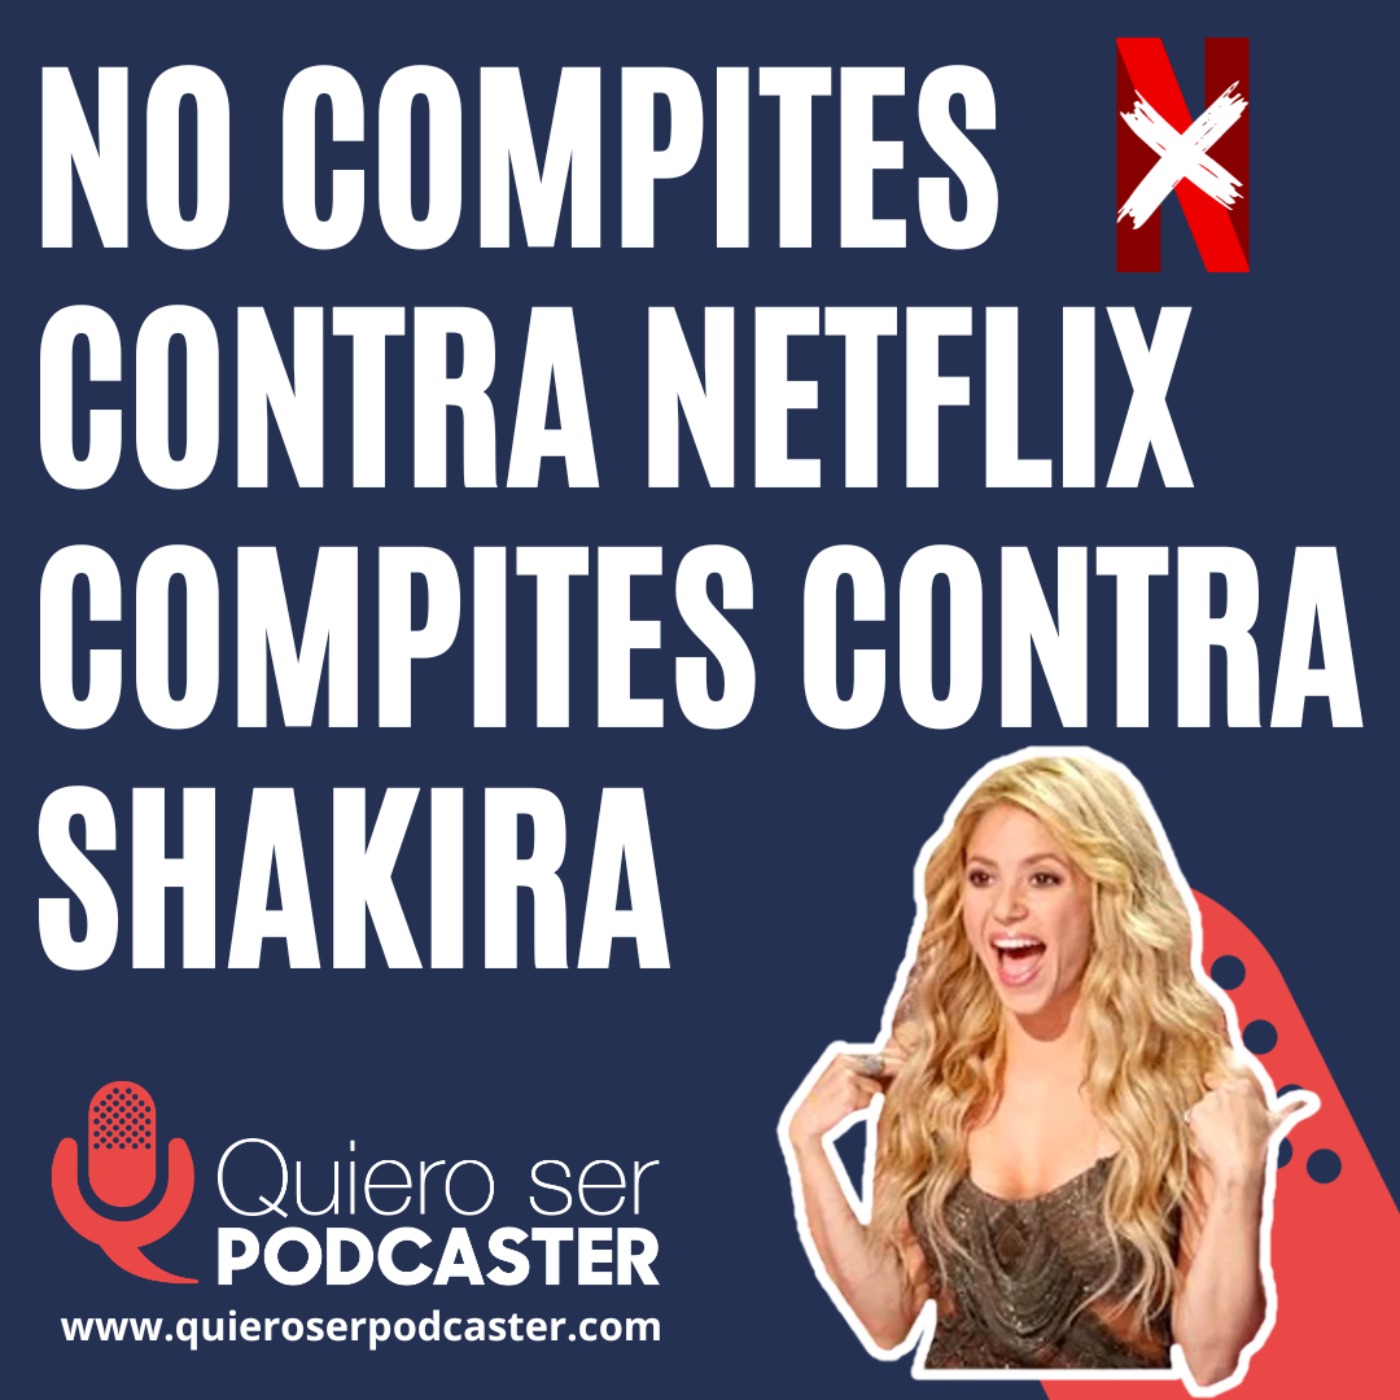 No compites contra Netflix, compites contra Shakira